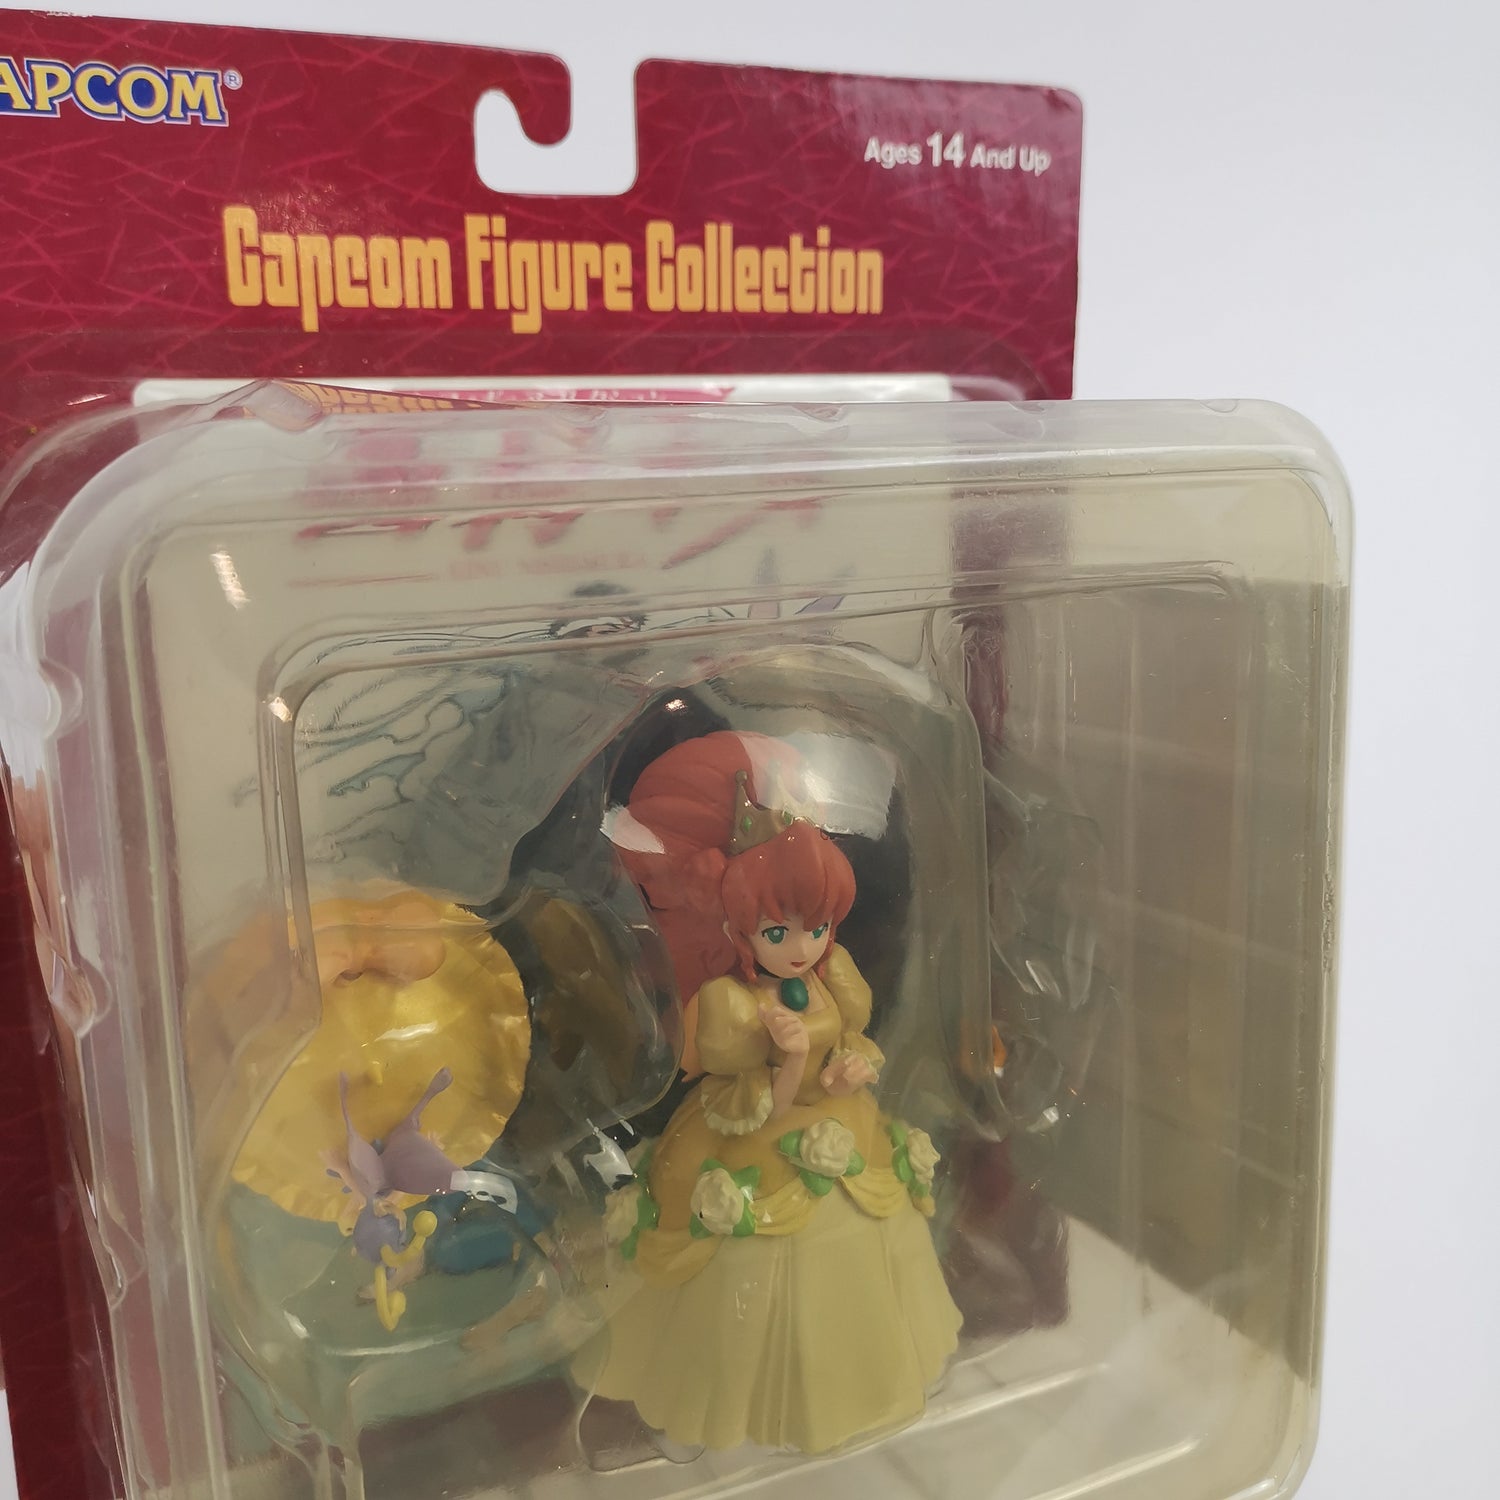 Collectible figure: Capcom Figure Collection - Kinu Nishimura - Princess Tiara OVP NEW